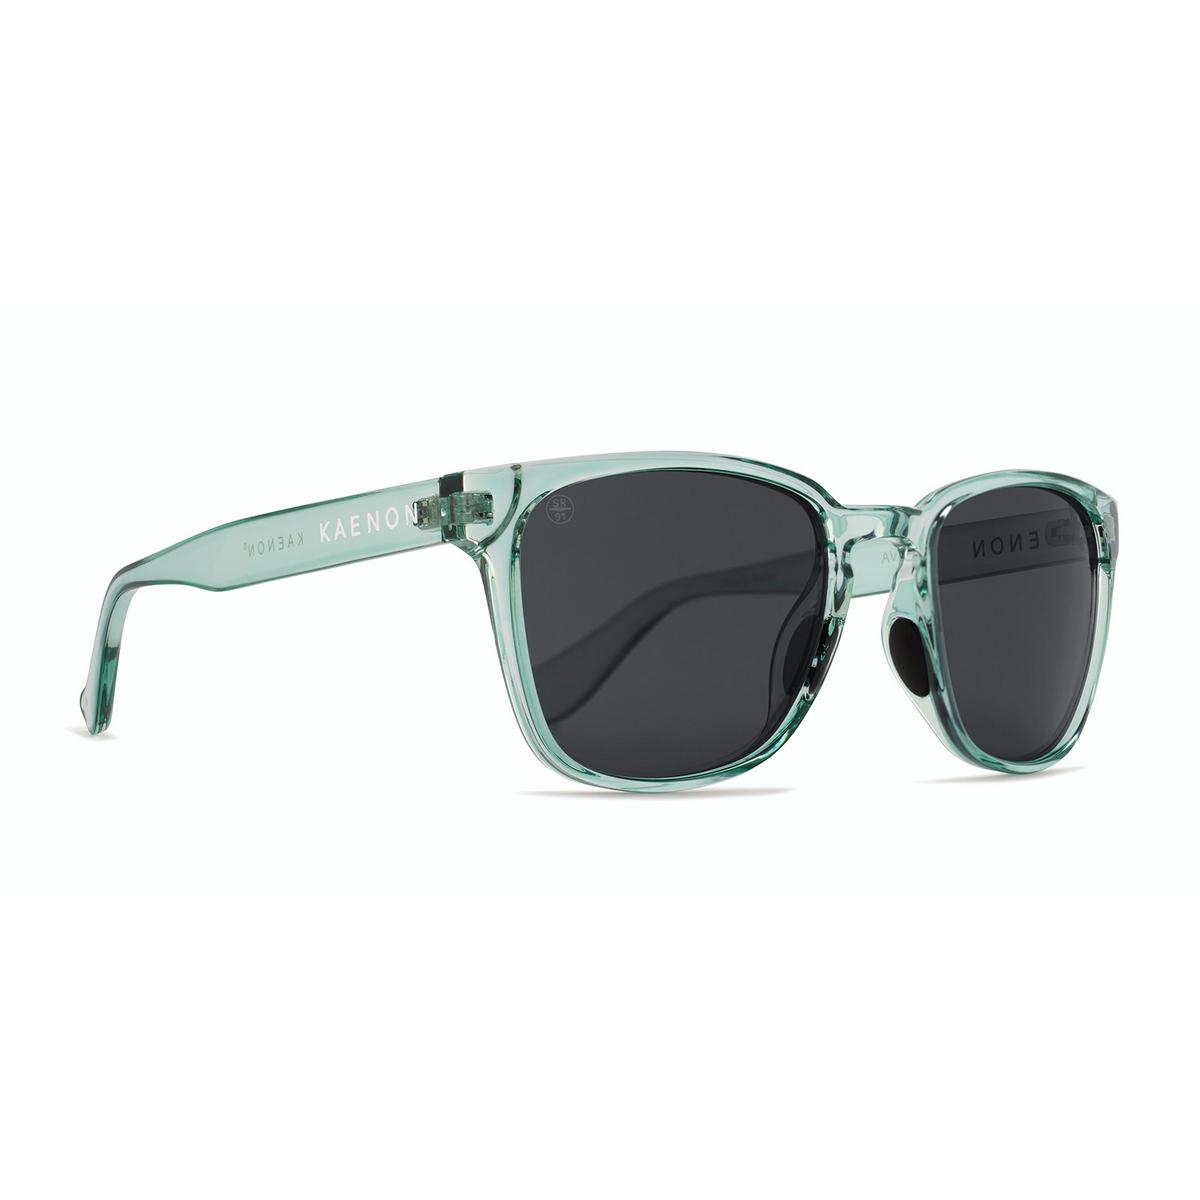 Kaenon Avalon Polarized Sunglasses